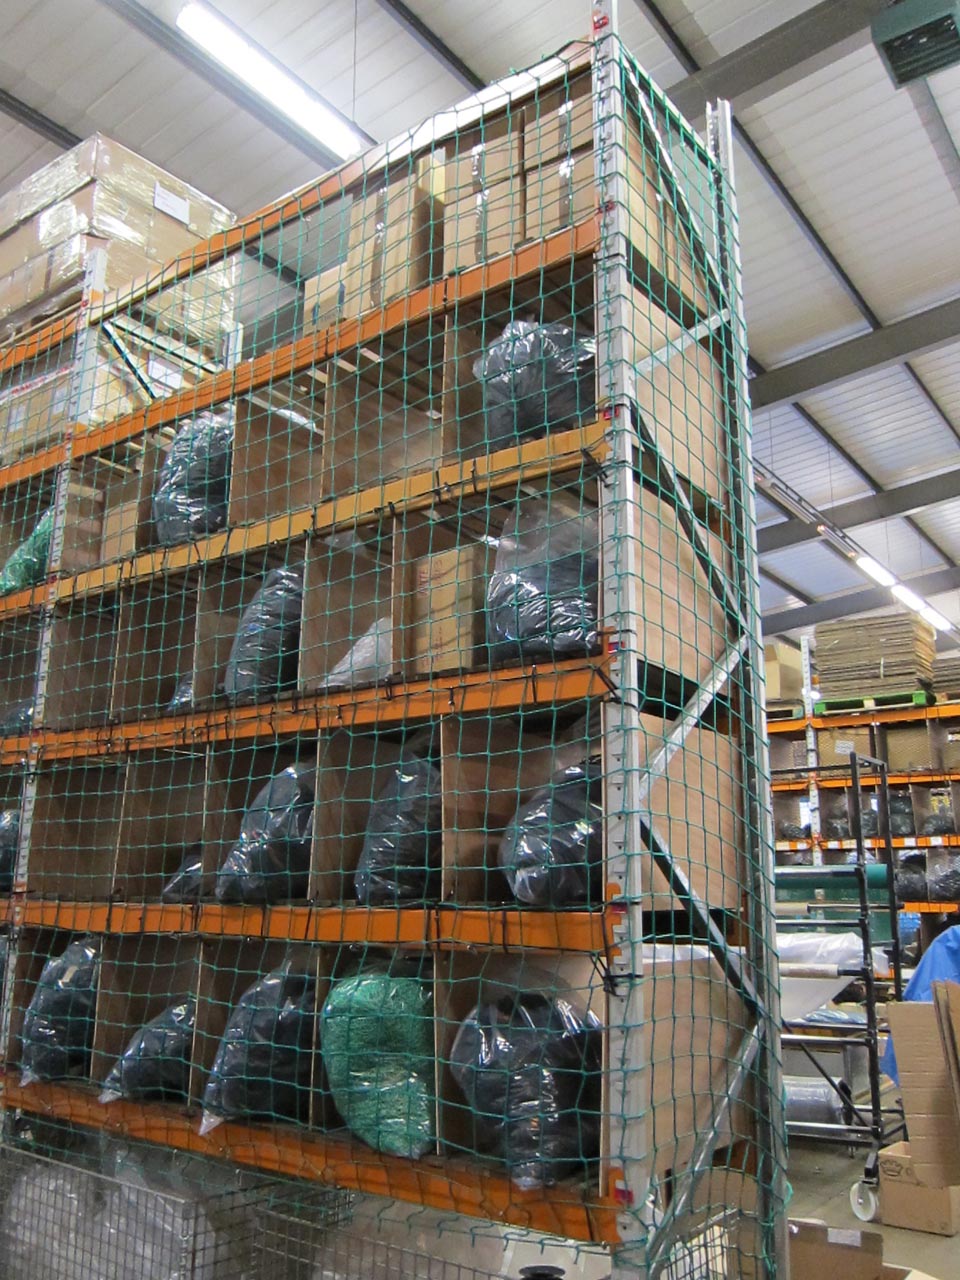 Cargo nets for warehouse racking.